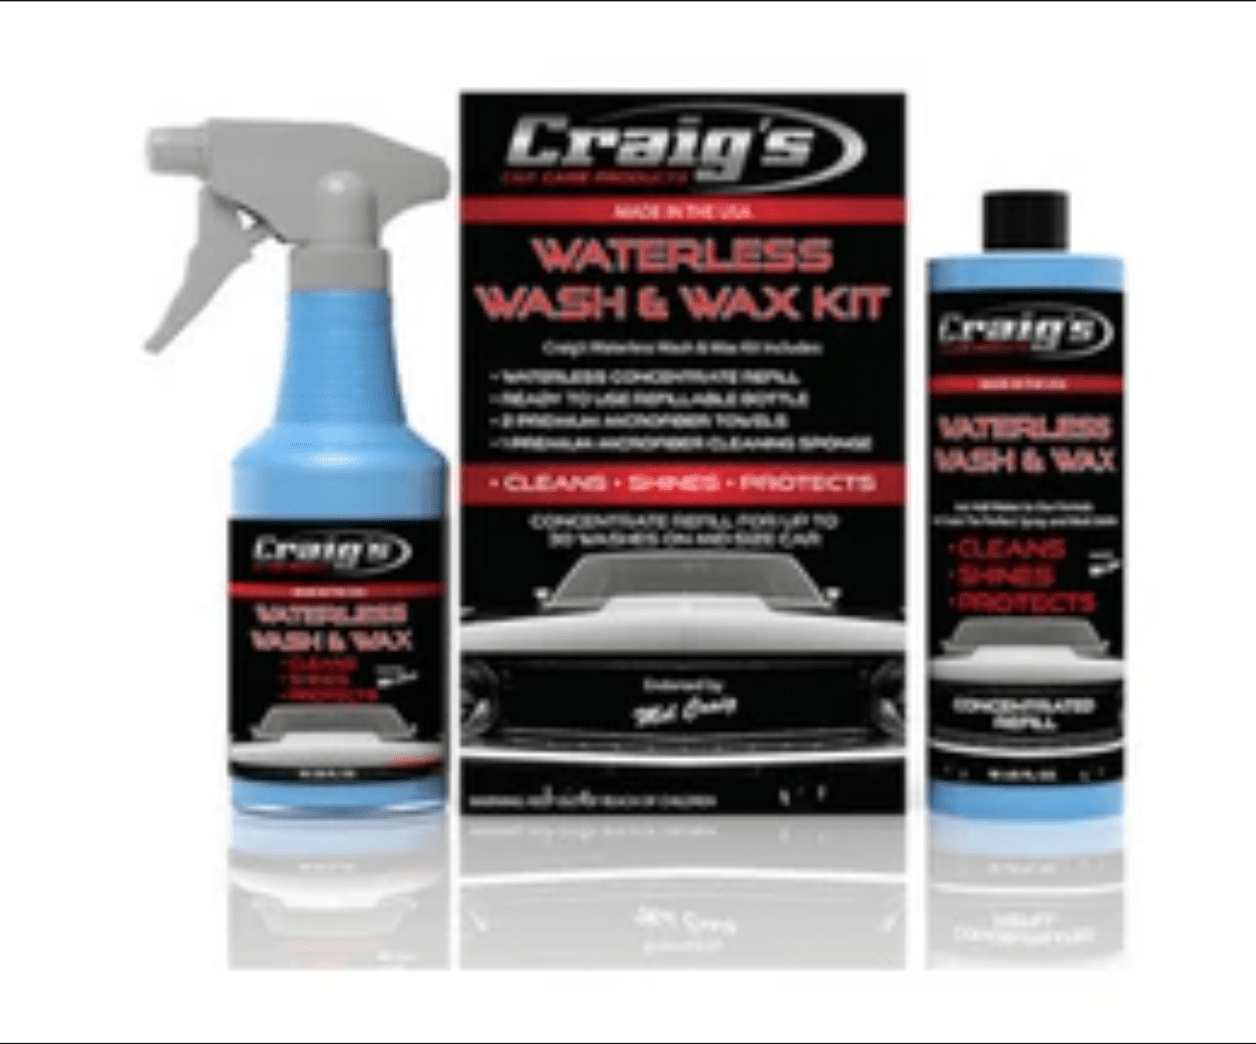 Waterless Wash and Wax